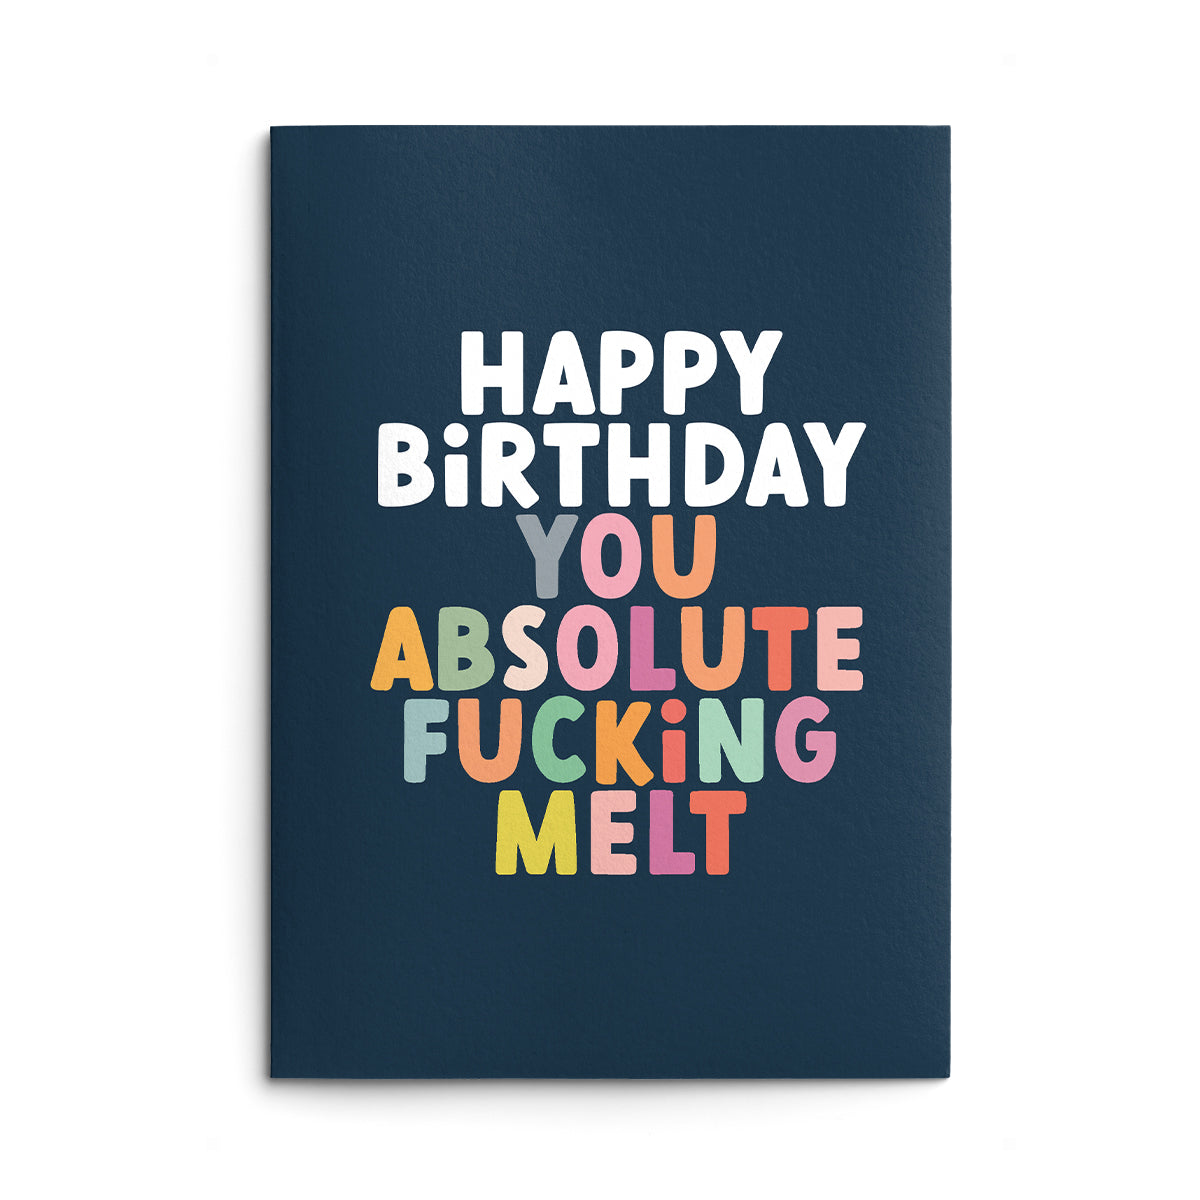 Fucking Melt Rude Birthday Card